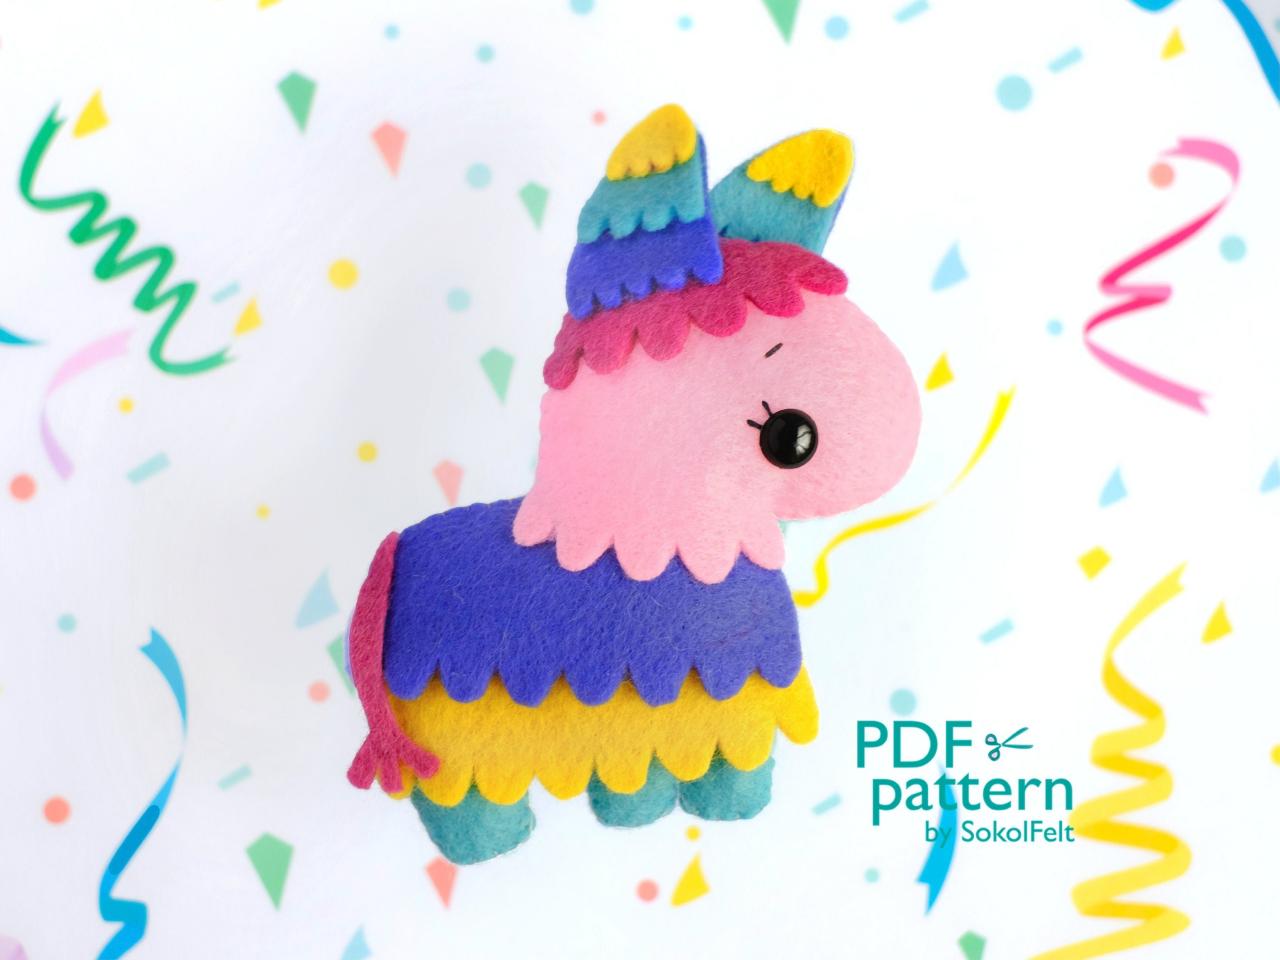 Cute Pinata Felt Toy Sewing Pdf And Svg Patterns, Llama Toy, Birthday Gift, Plush Name Garland